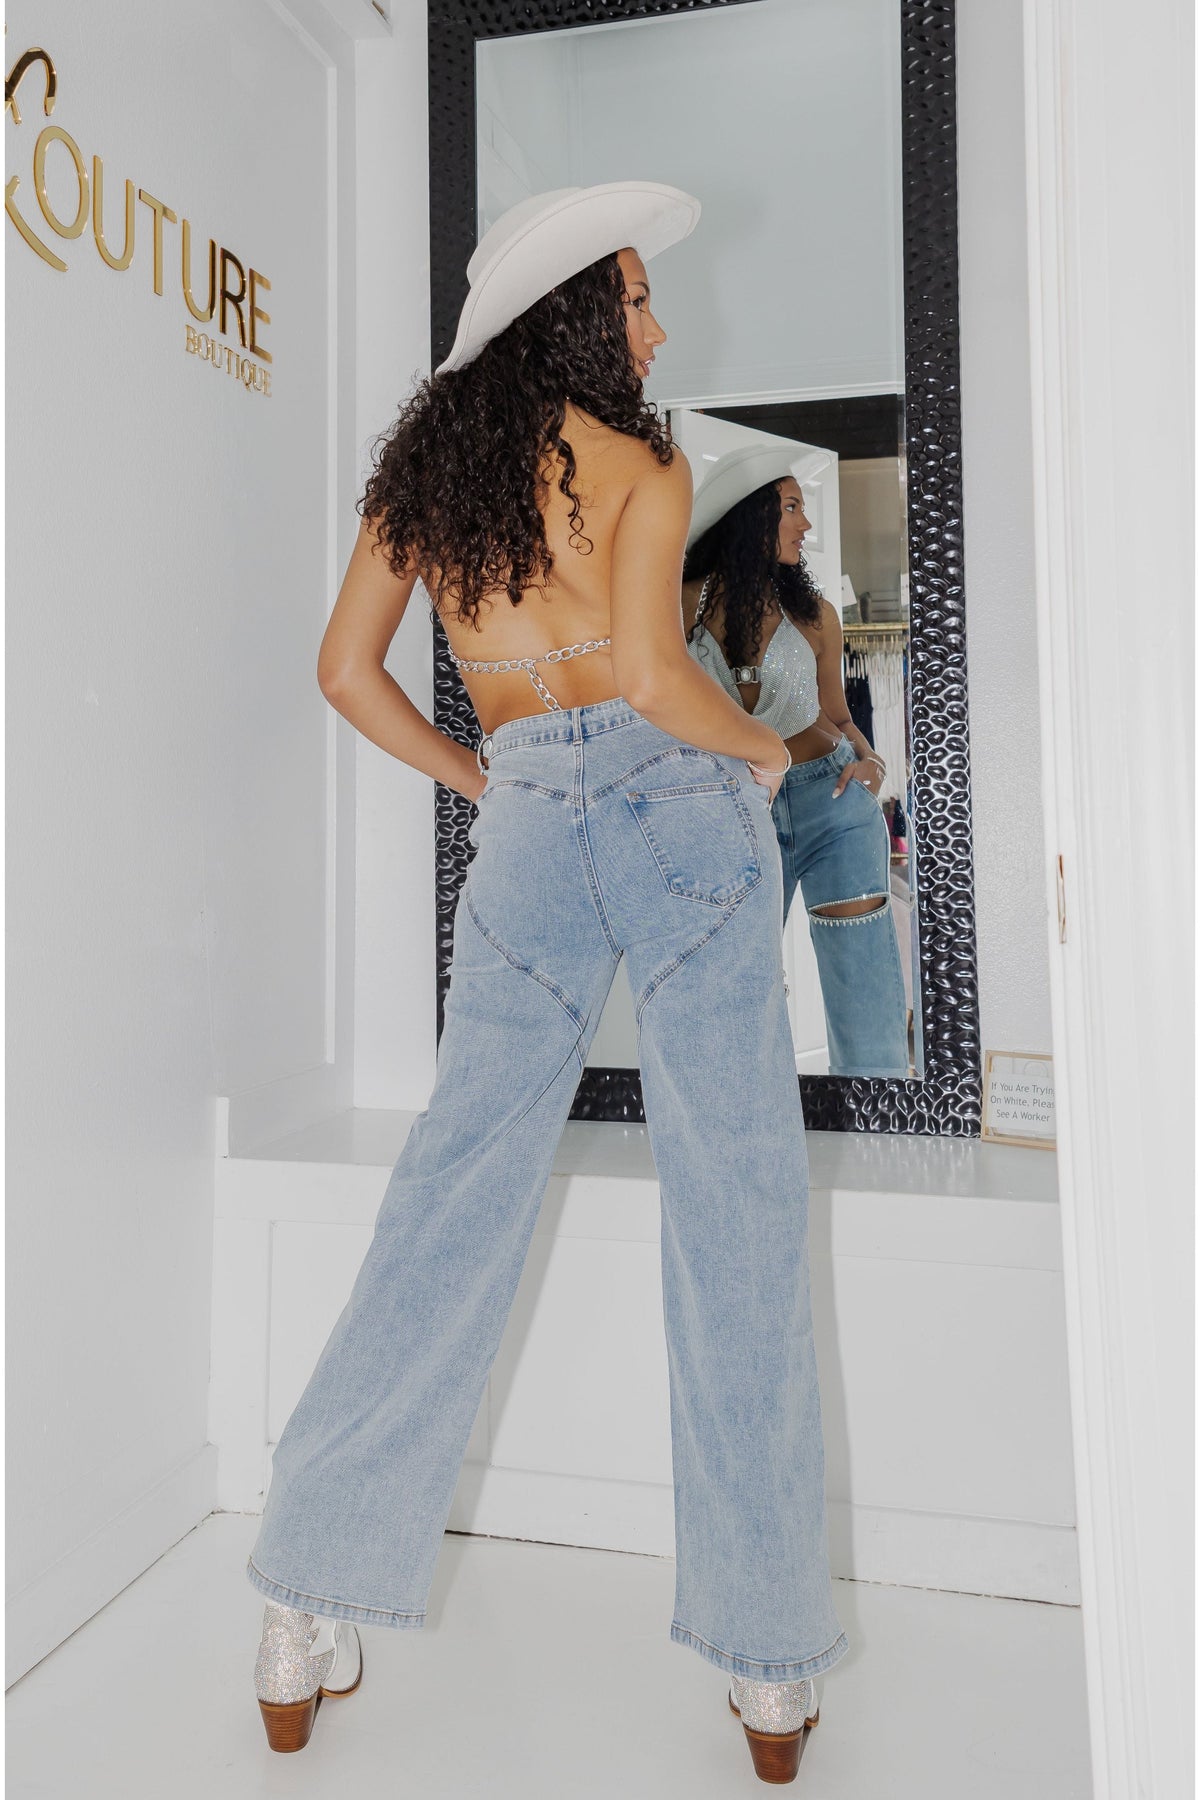 Denim Cut Front Rhinestone Jeans-Clothing-KCoutureBoutique, women's boutique in Bossier City, Louisiana